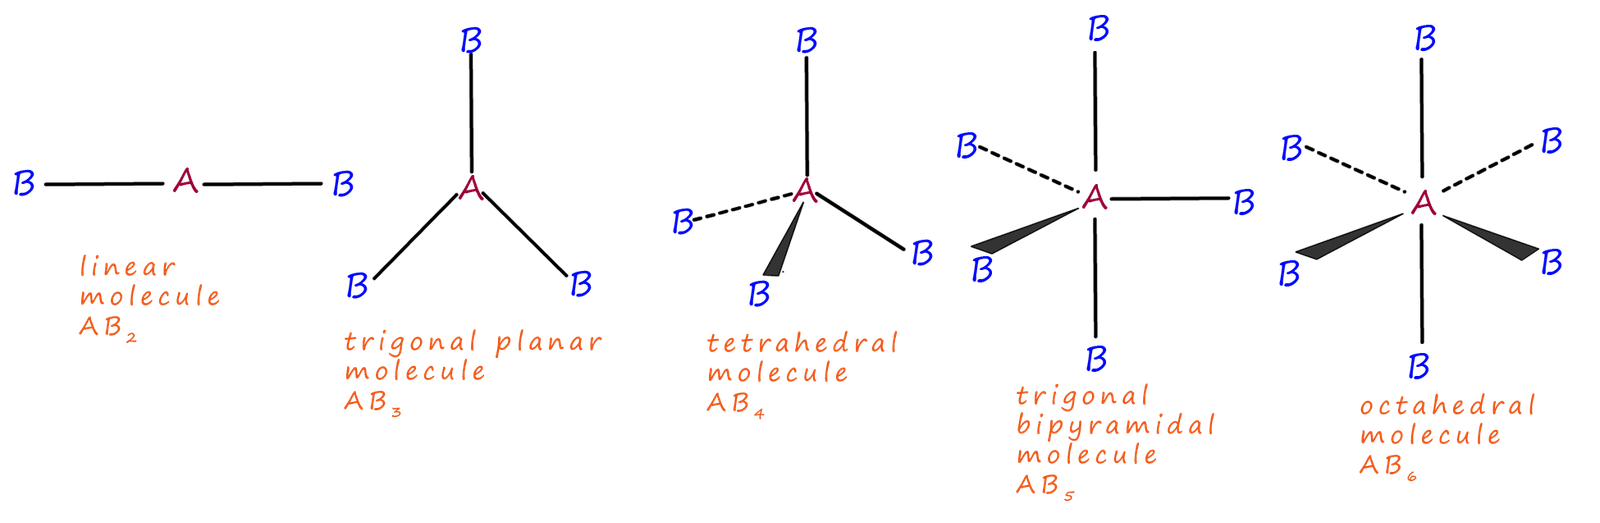 basic outlines of molecular shapes